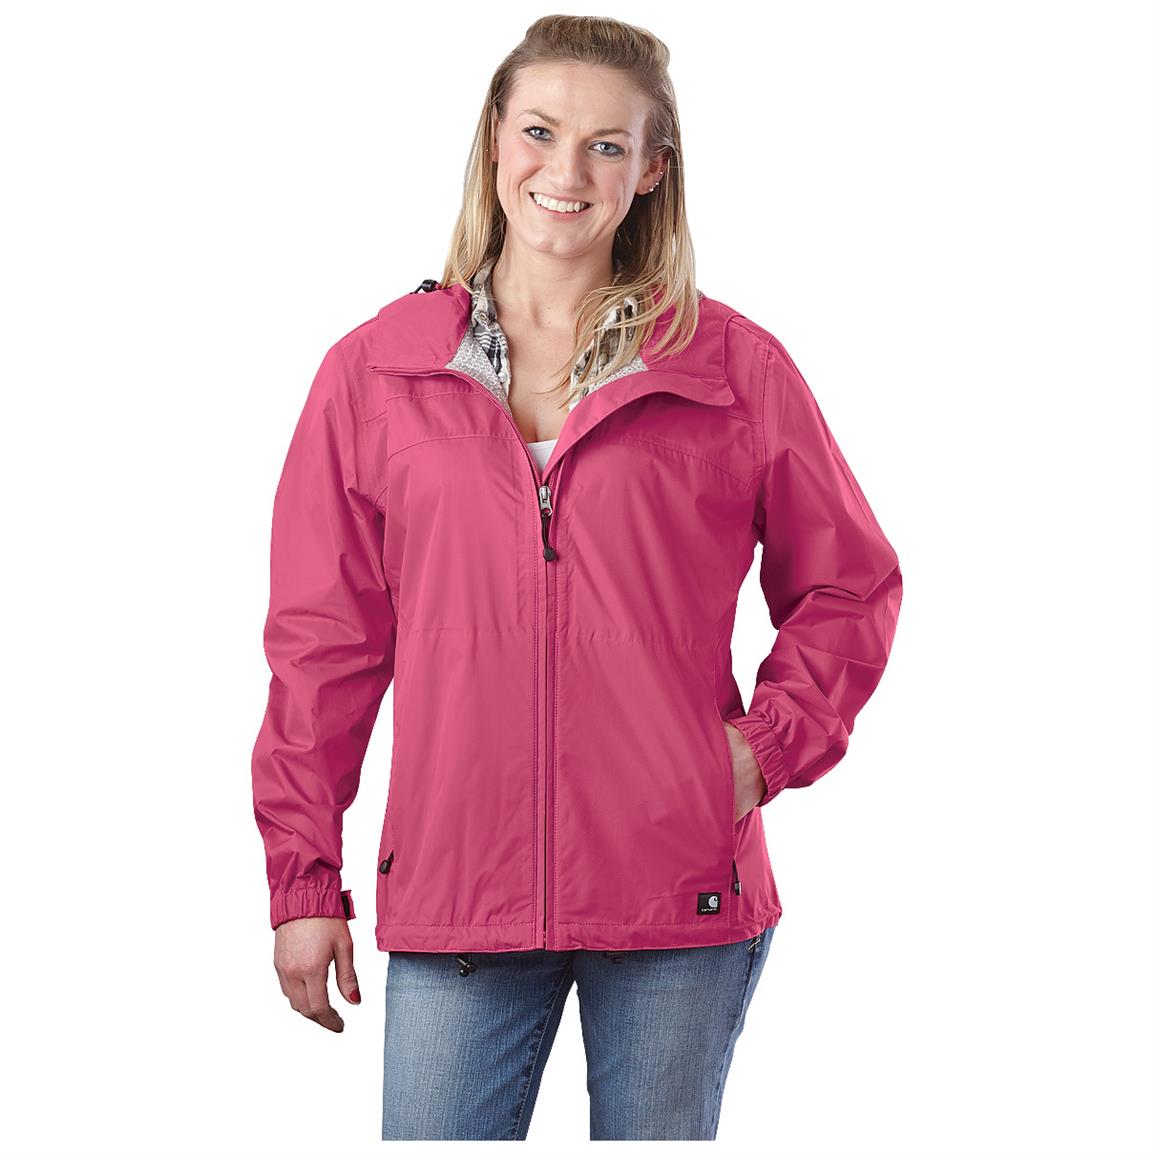 Women's Carhartt Downburst Waterproof Breathable Jacket, Wild Rose